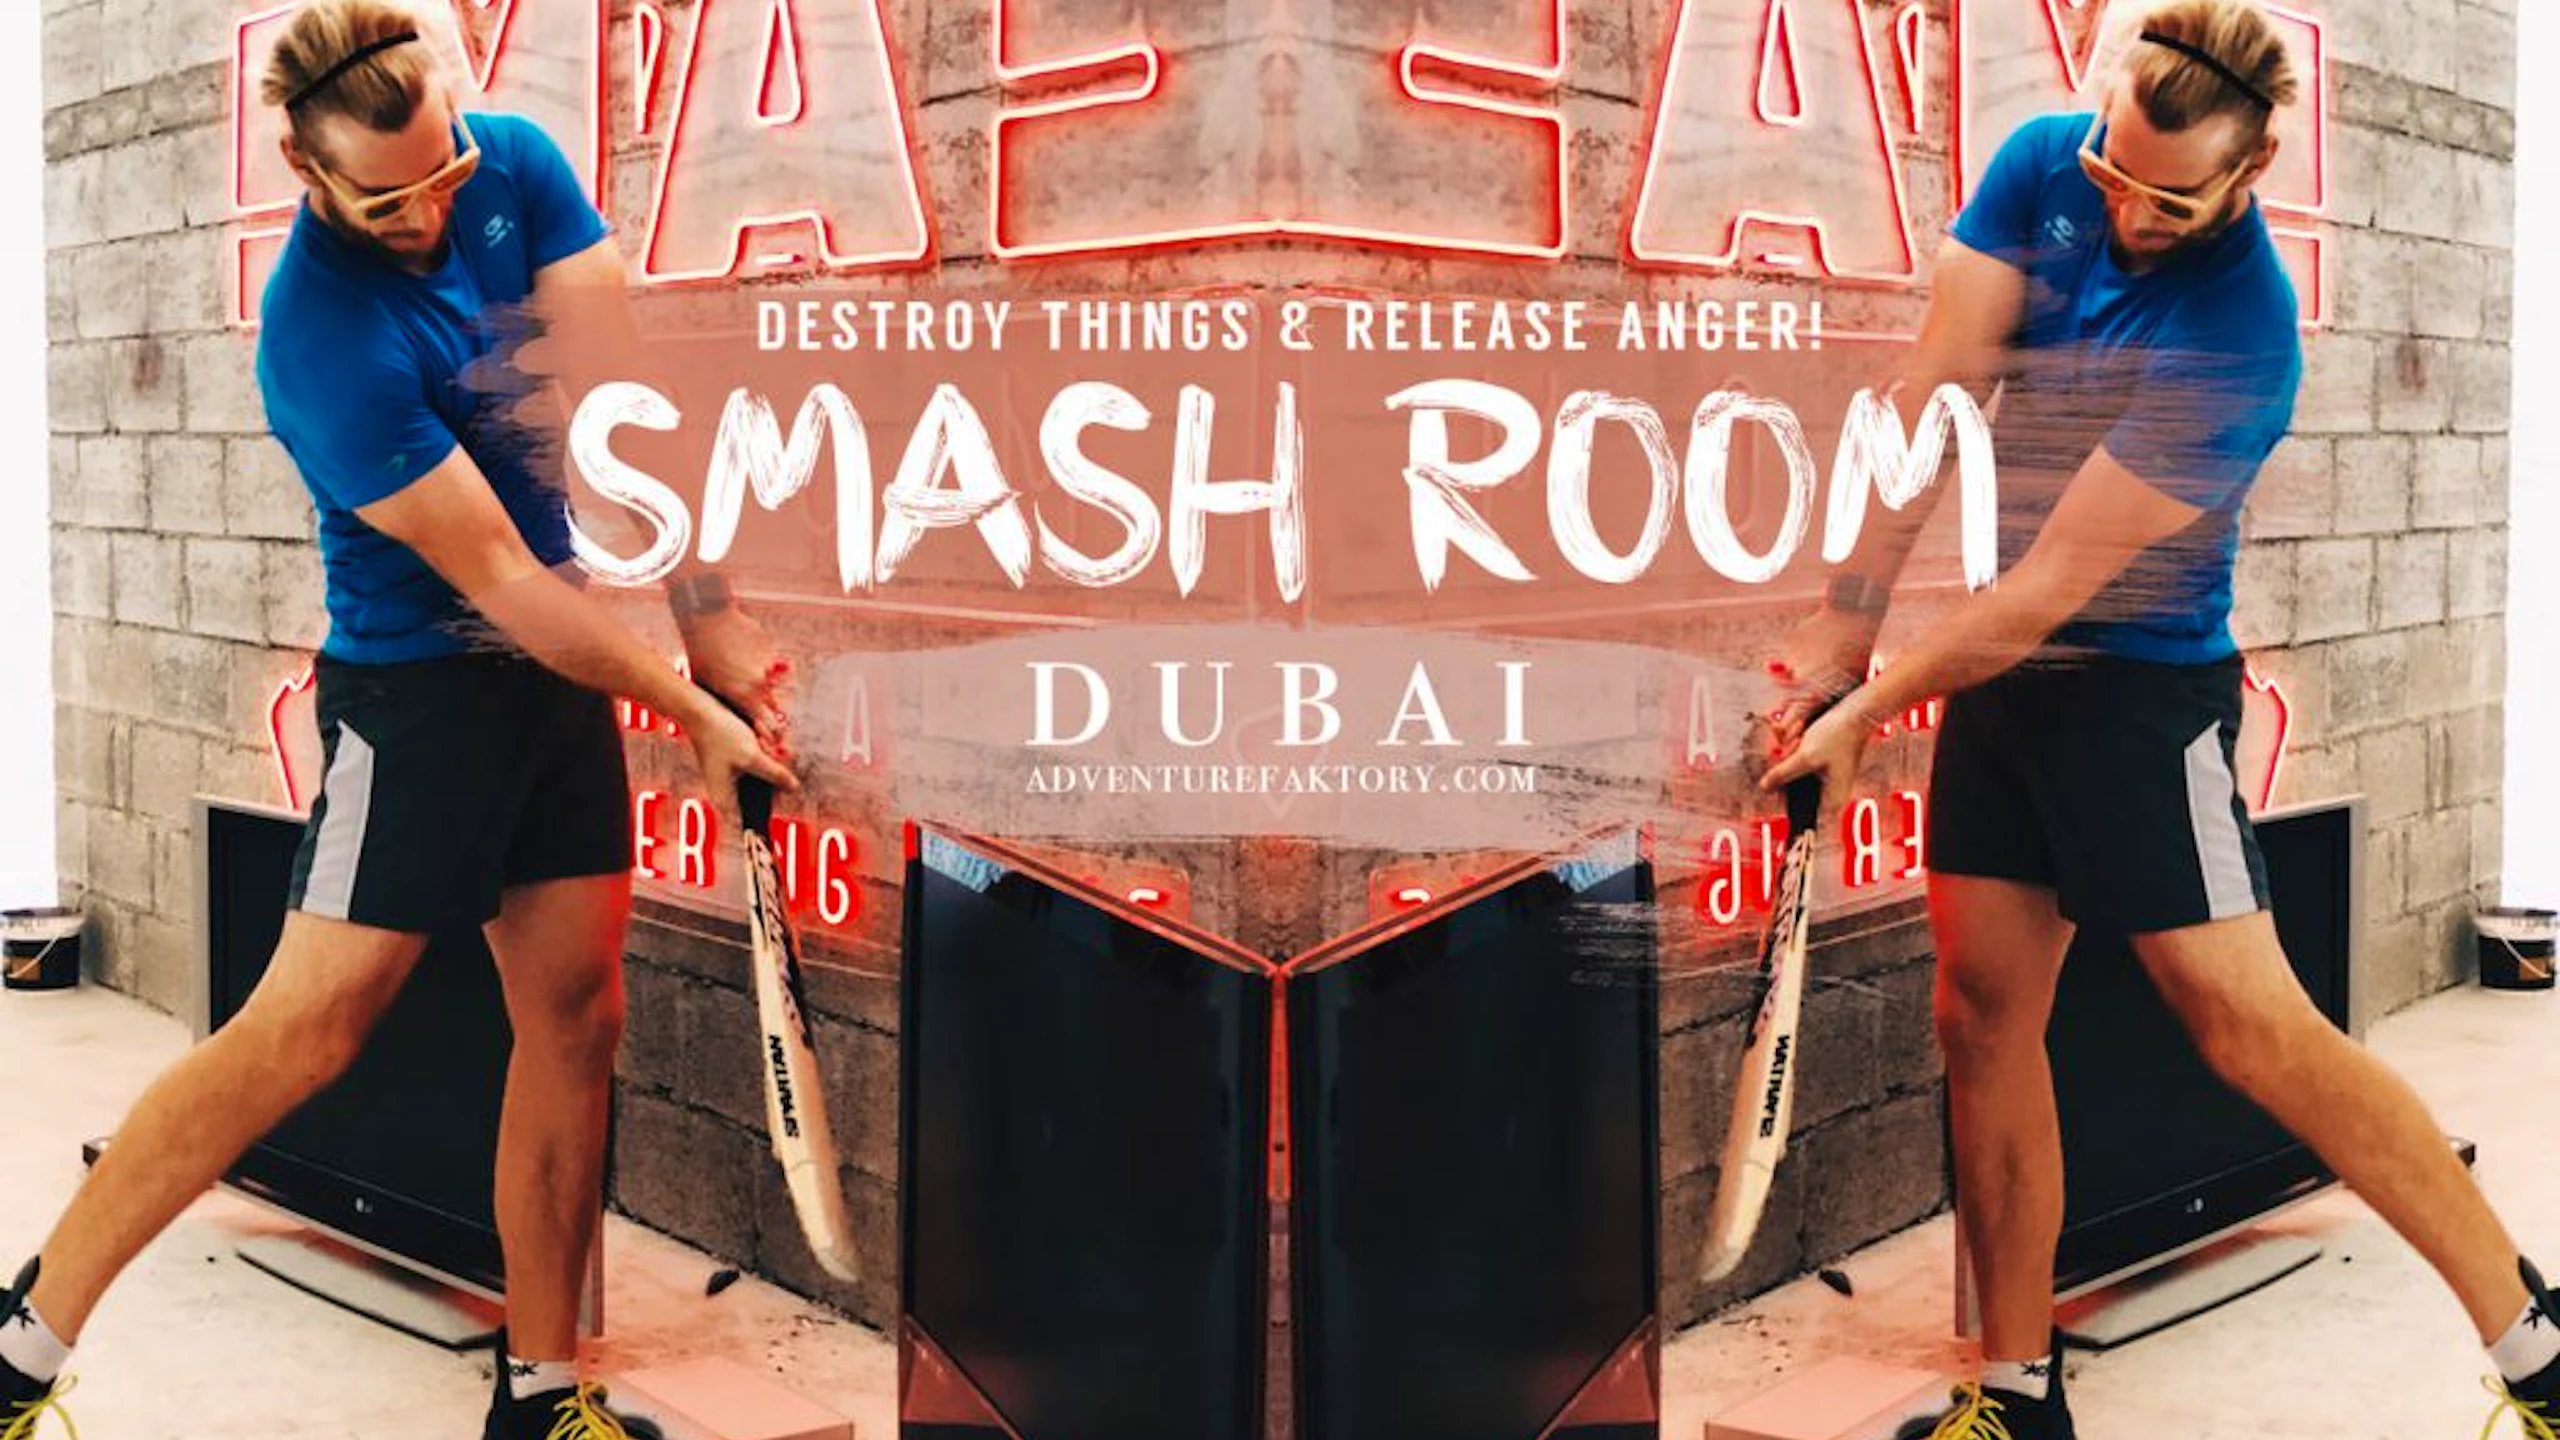 The Smash Room Dubai